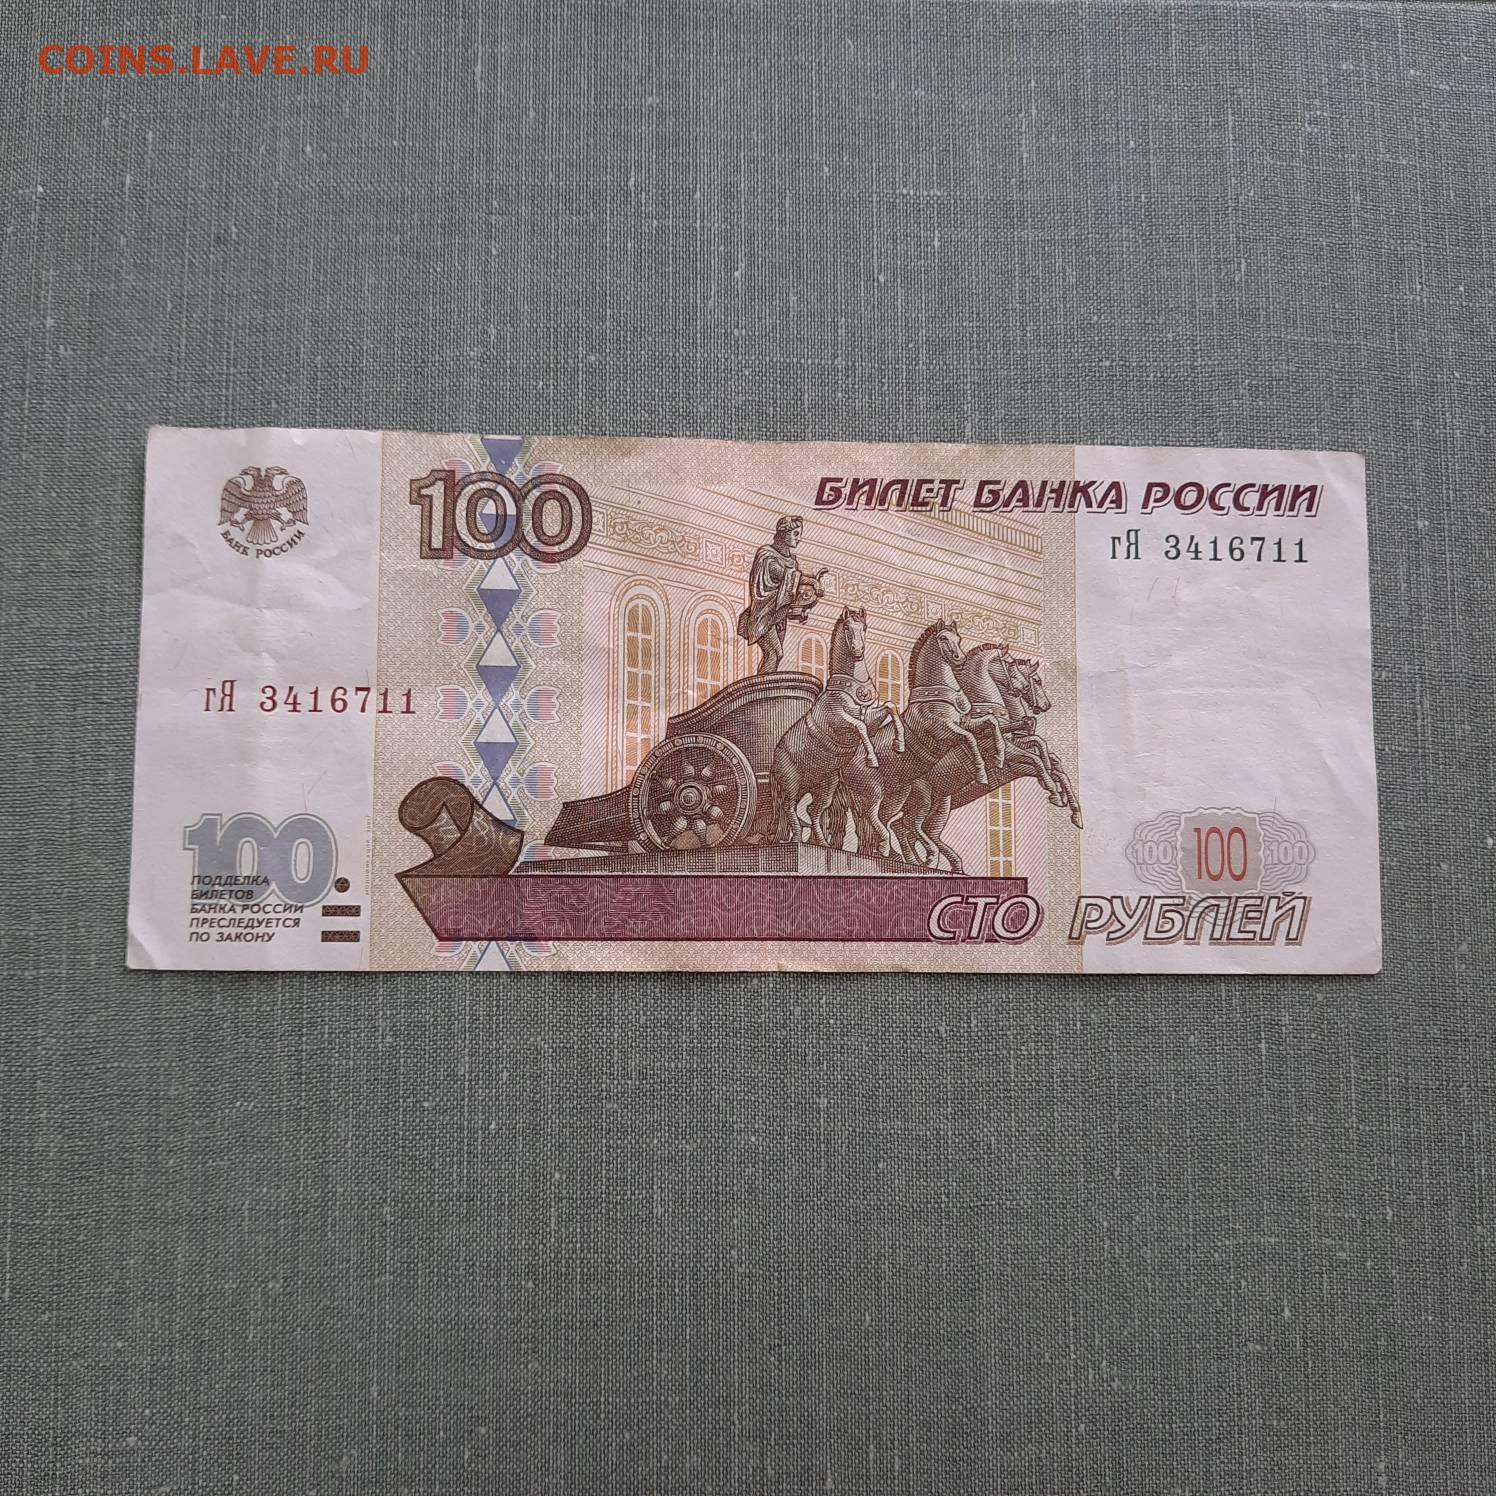 48 500 рублей. СТО рублей модификация 2001. 100 Рублей модификация 2001. 100 Рублей 1997. 10 Рублей модификация 2001.